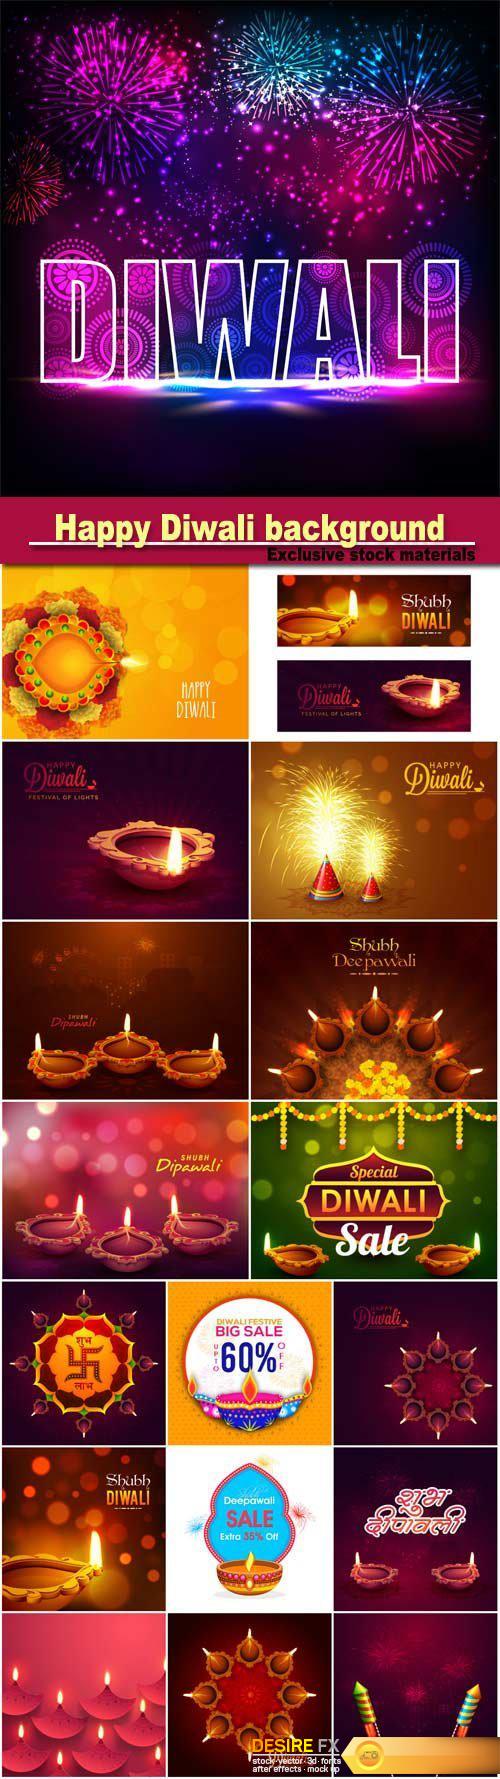 Happy Diwali celebration background